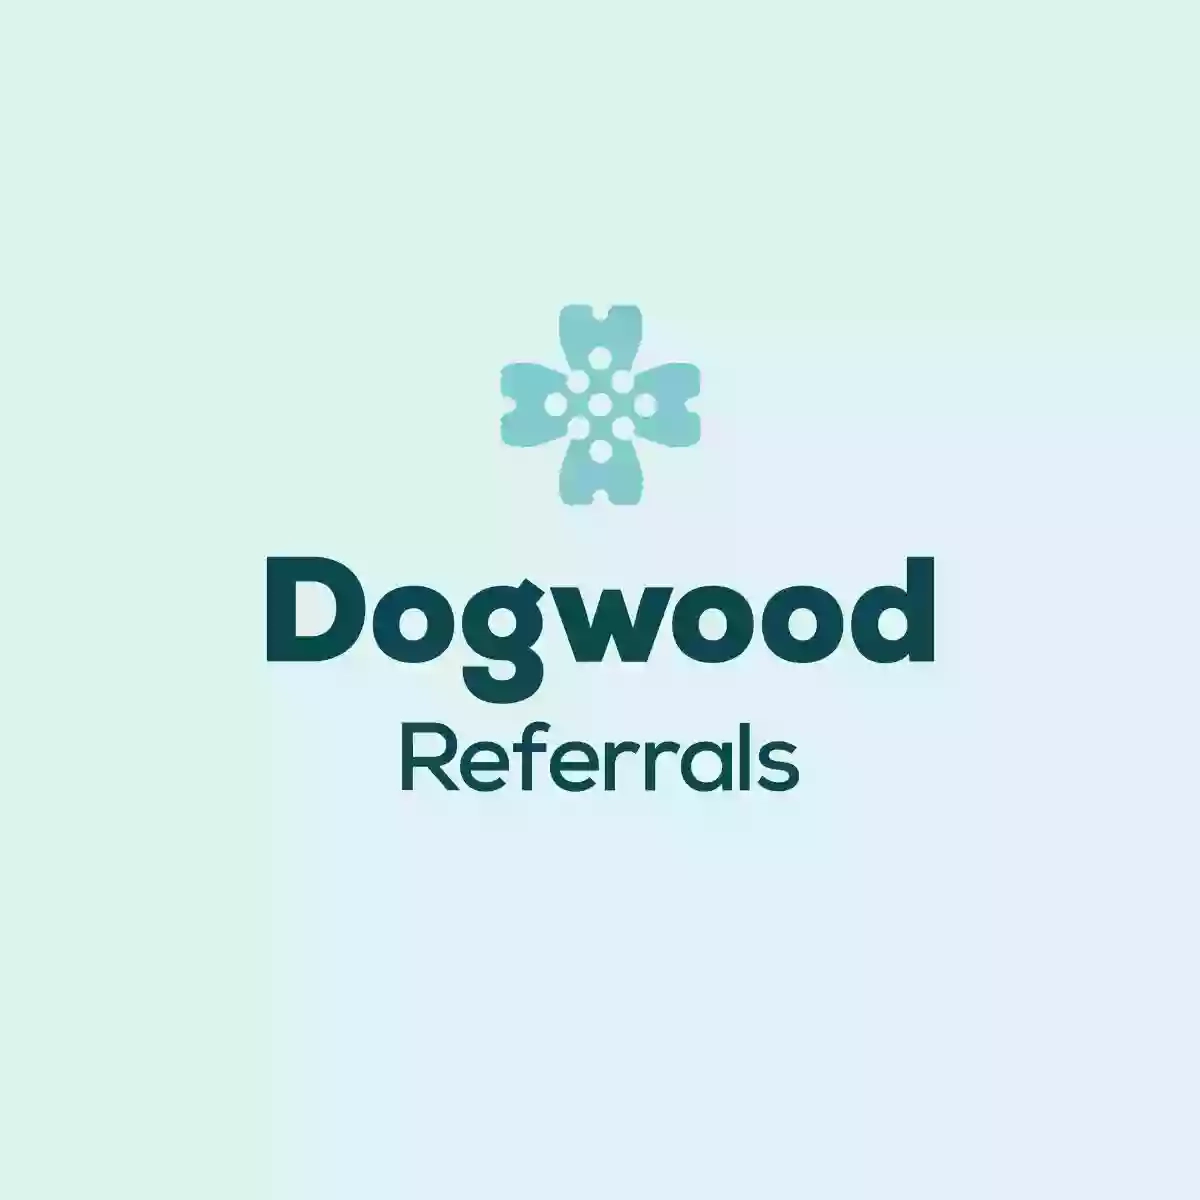 Dogwood Referrals